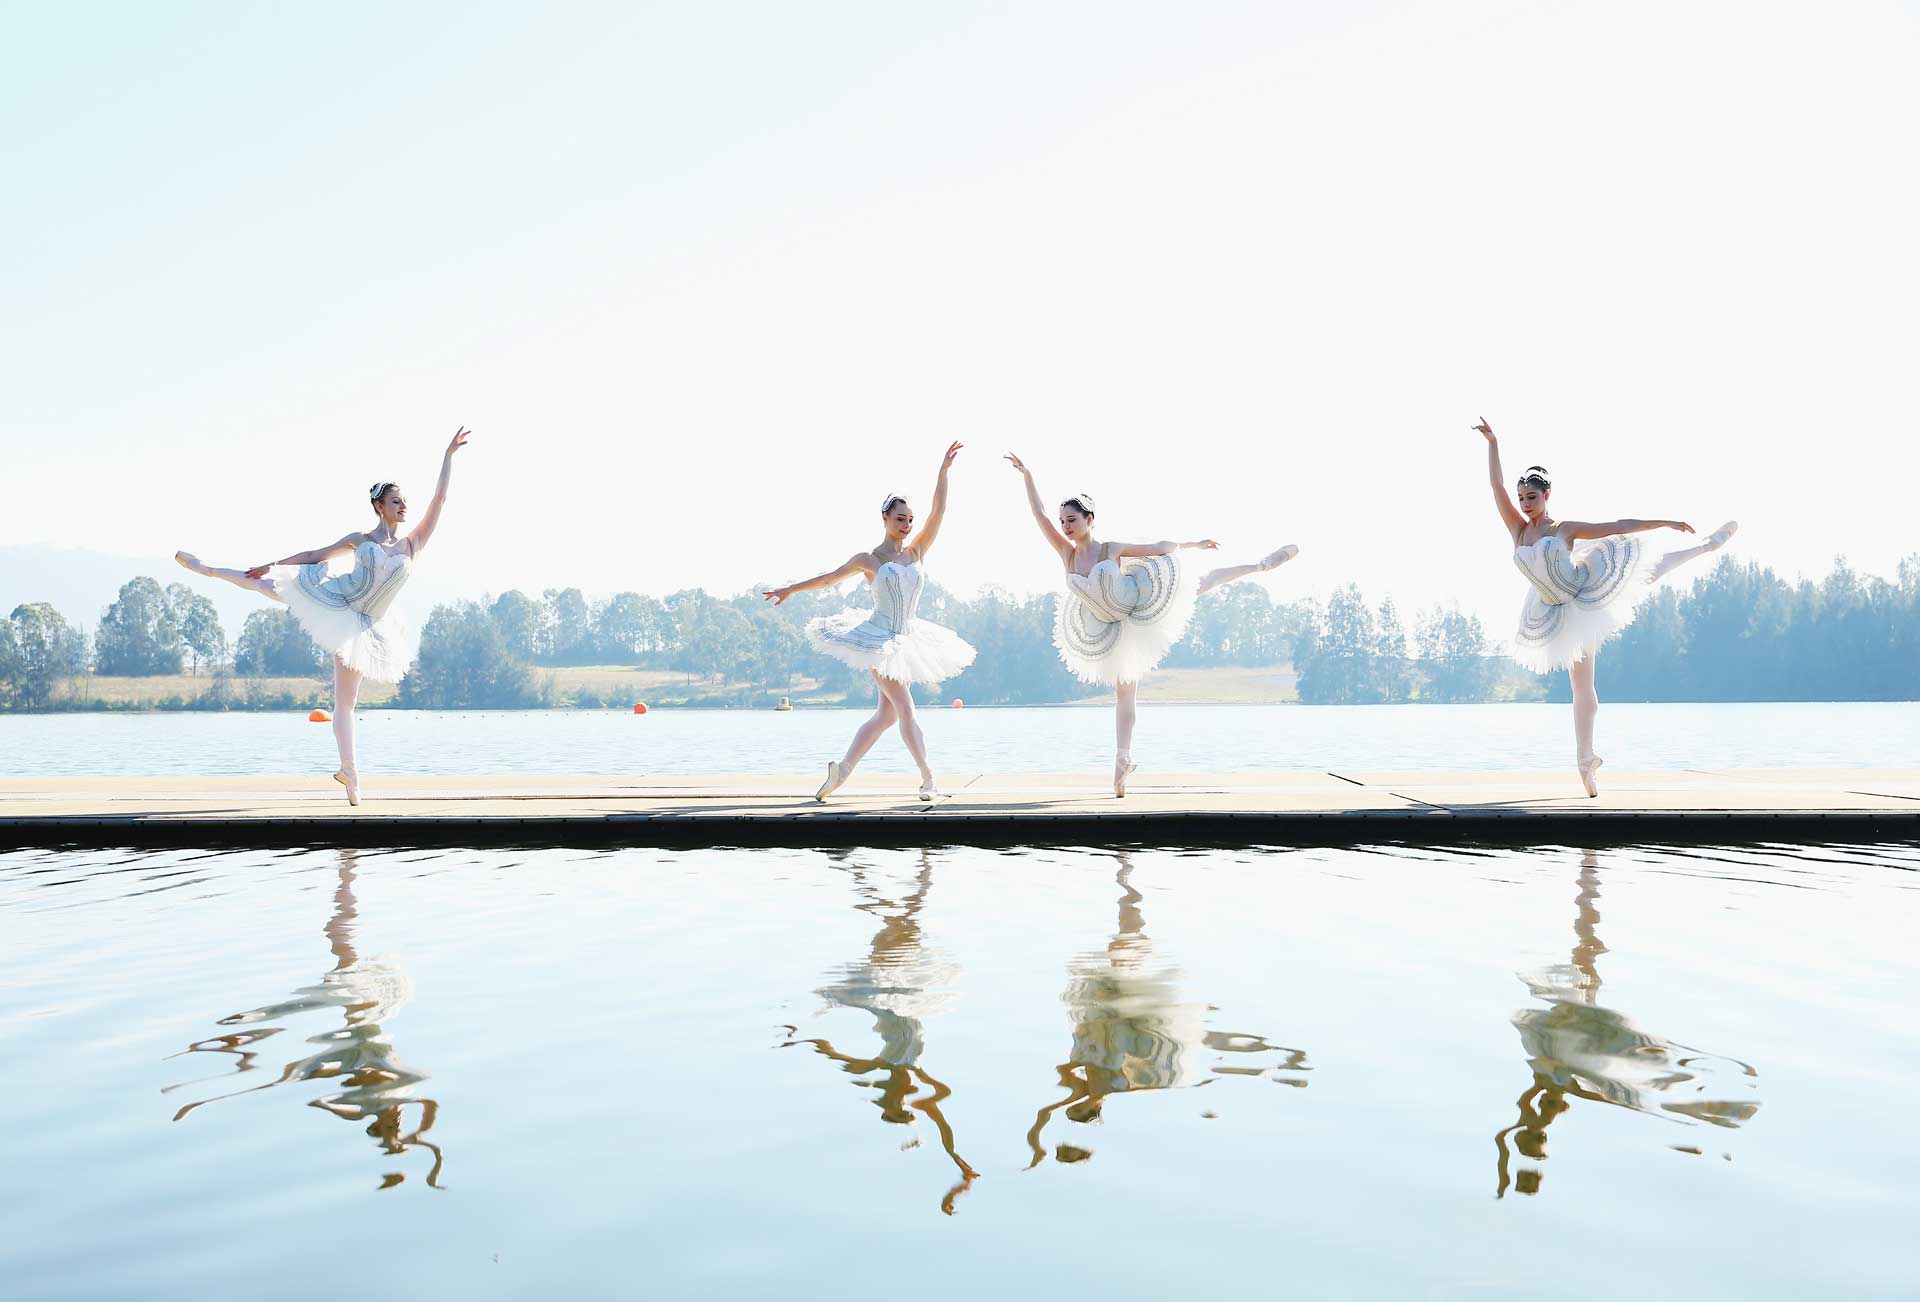 Ballet dancers perform during a media call for the Australian Ballet at Sydney International Regatta Centre on May 6, 2016 in Sydney, Australia.